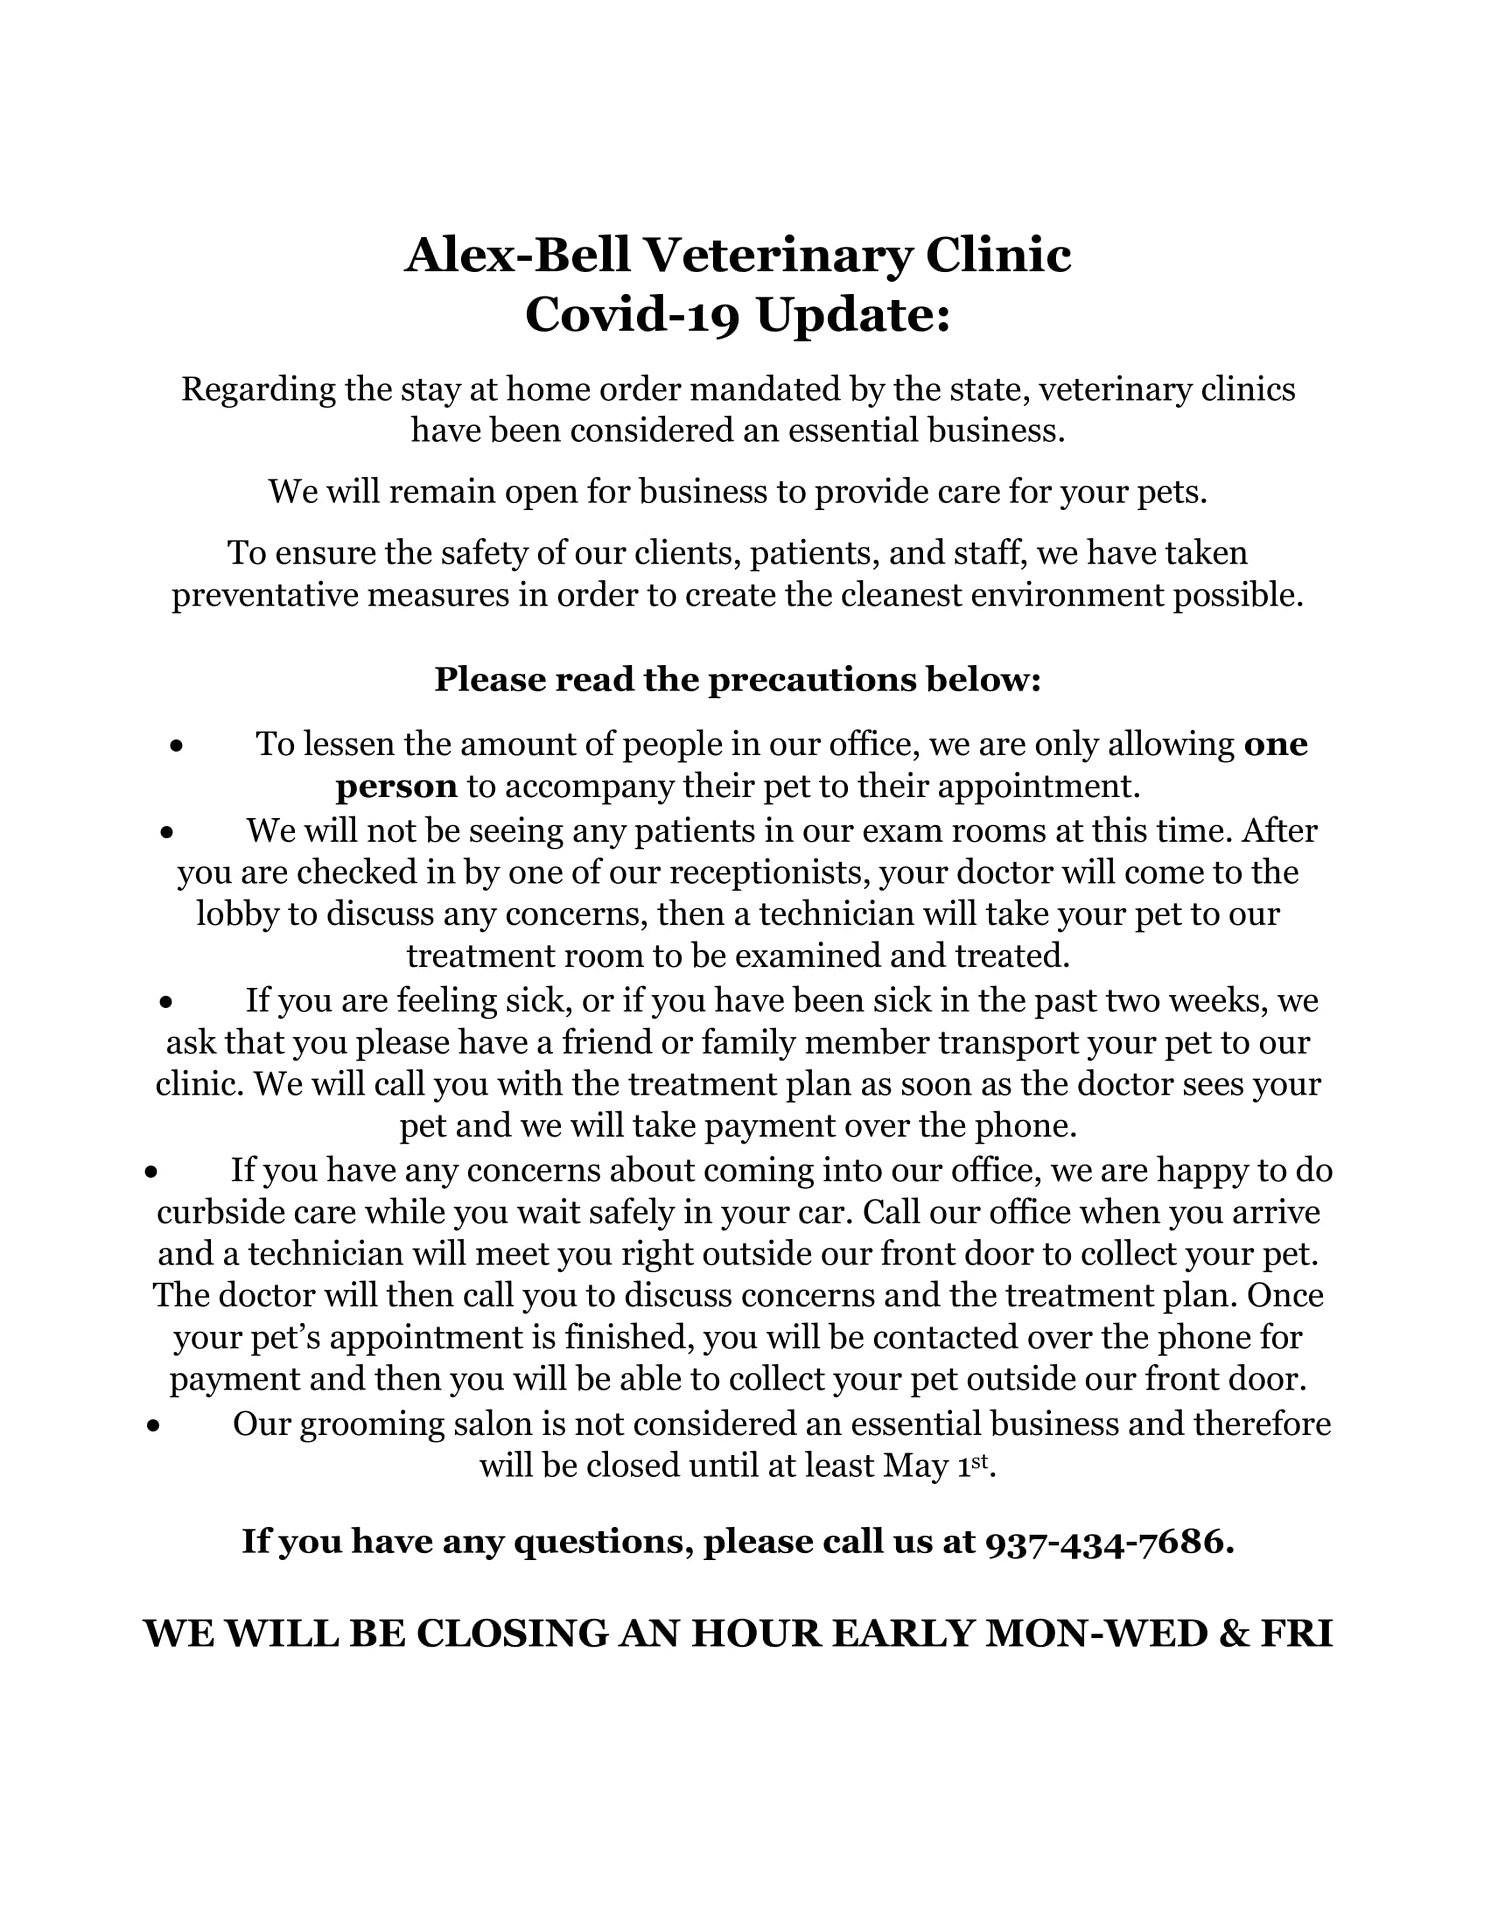 Alex-Bell Veterinary Clinic: Ellis S M DVM